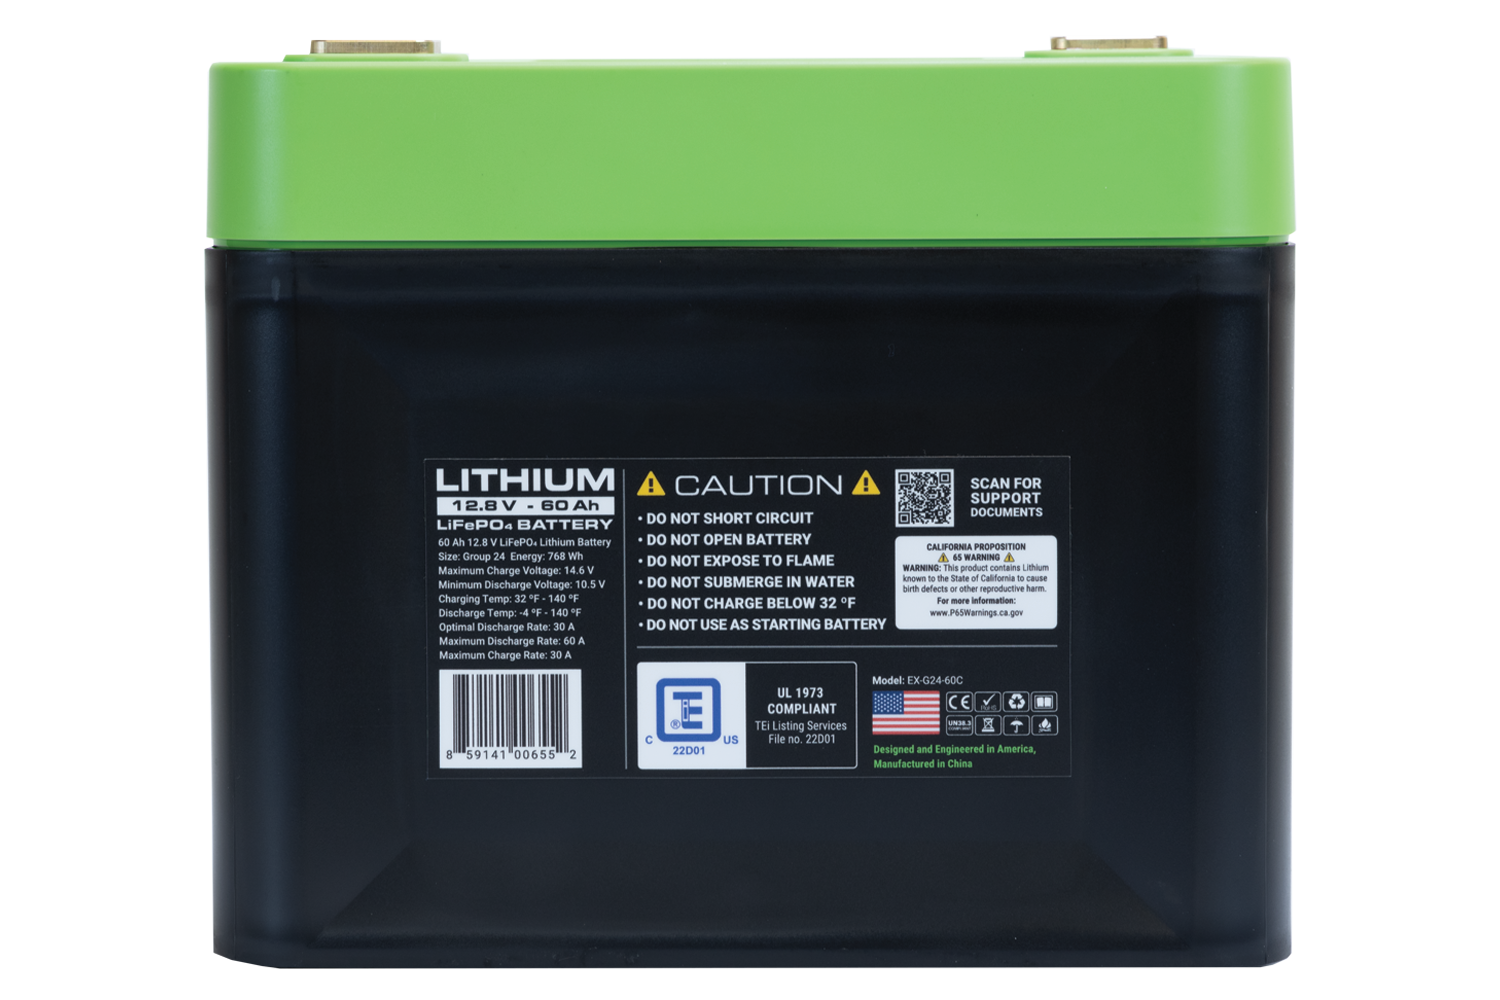 RELiON RB60 12V 60Ah LiFePO4 Lithium Battery